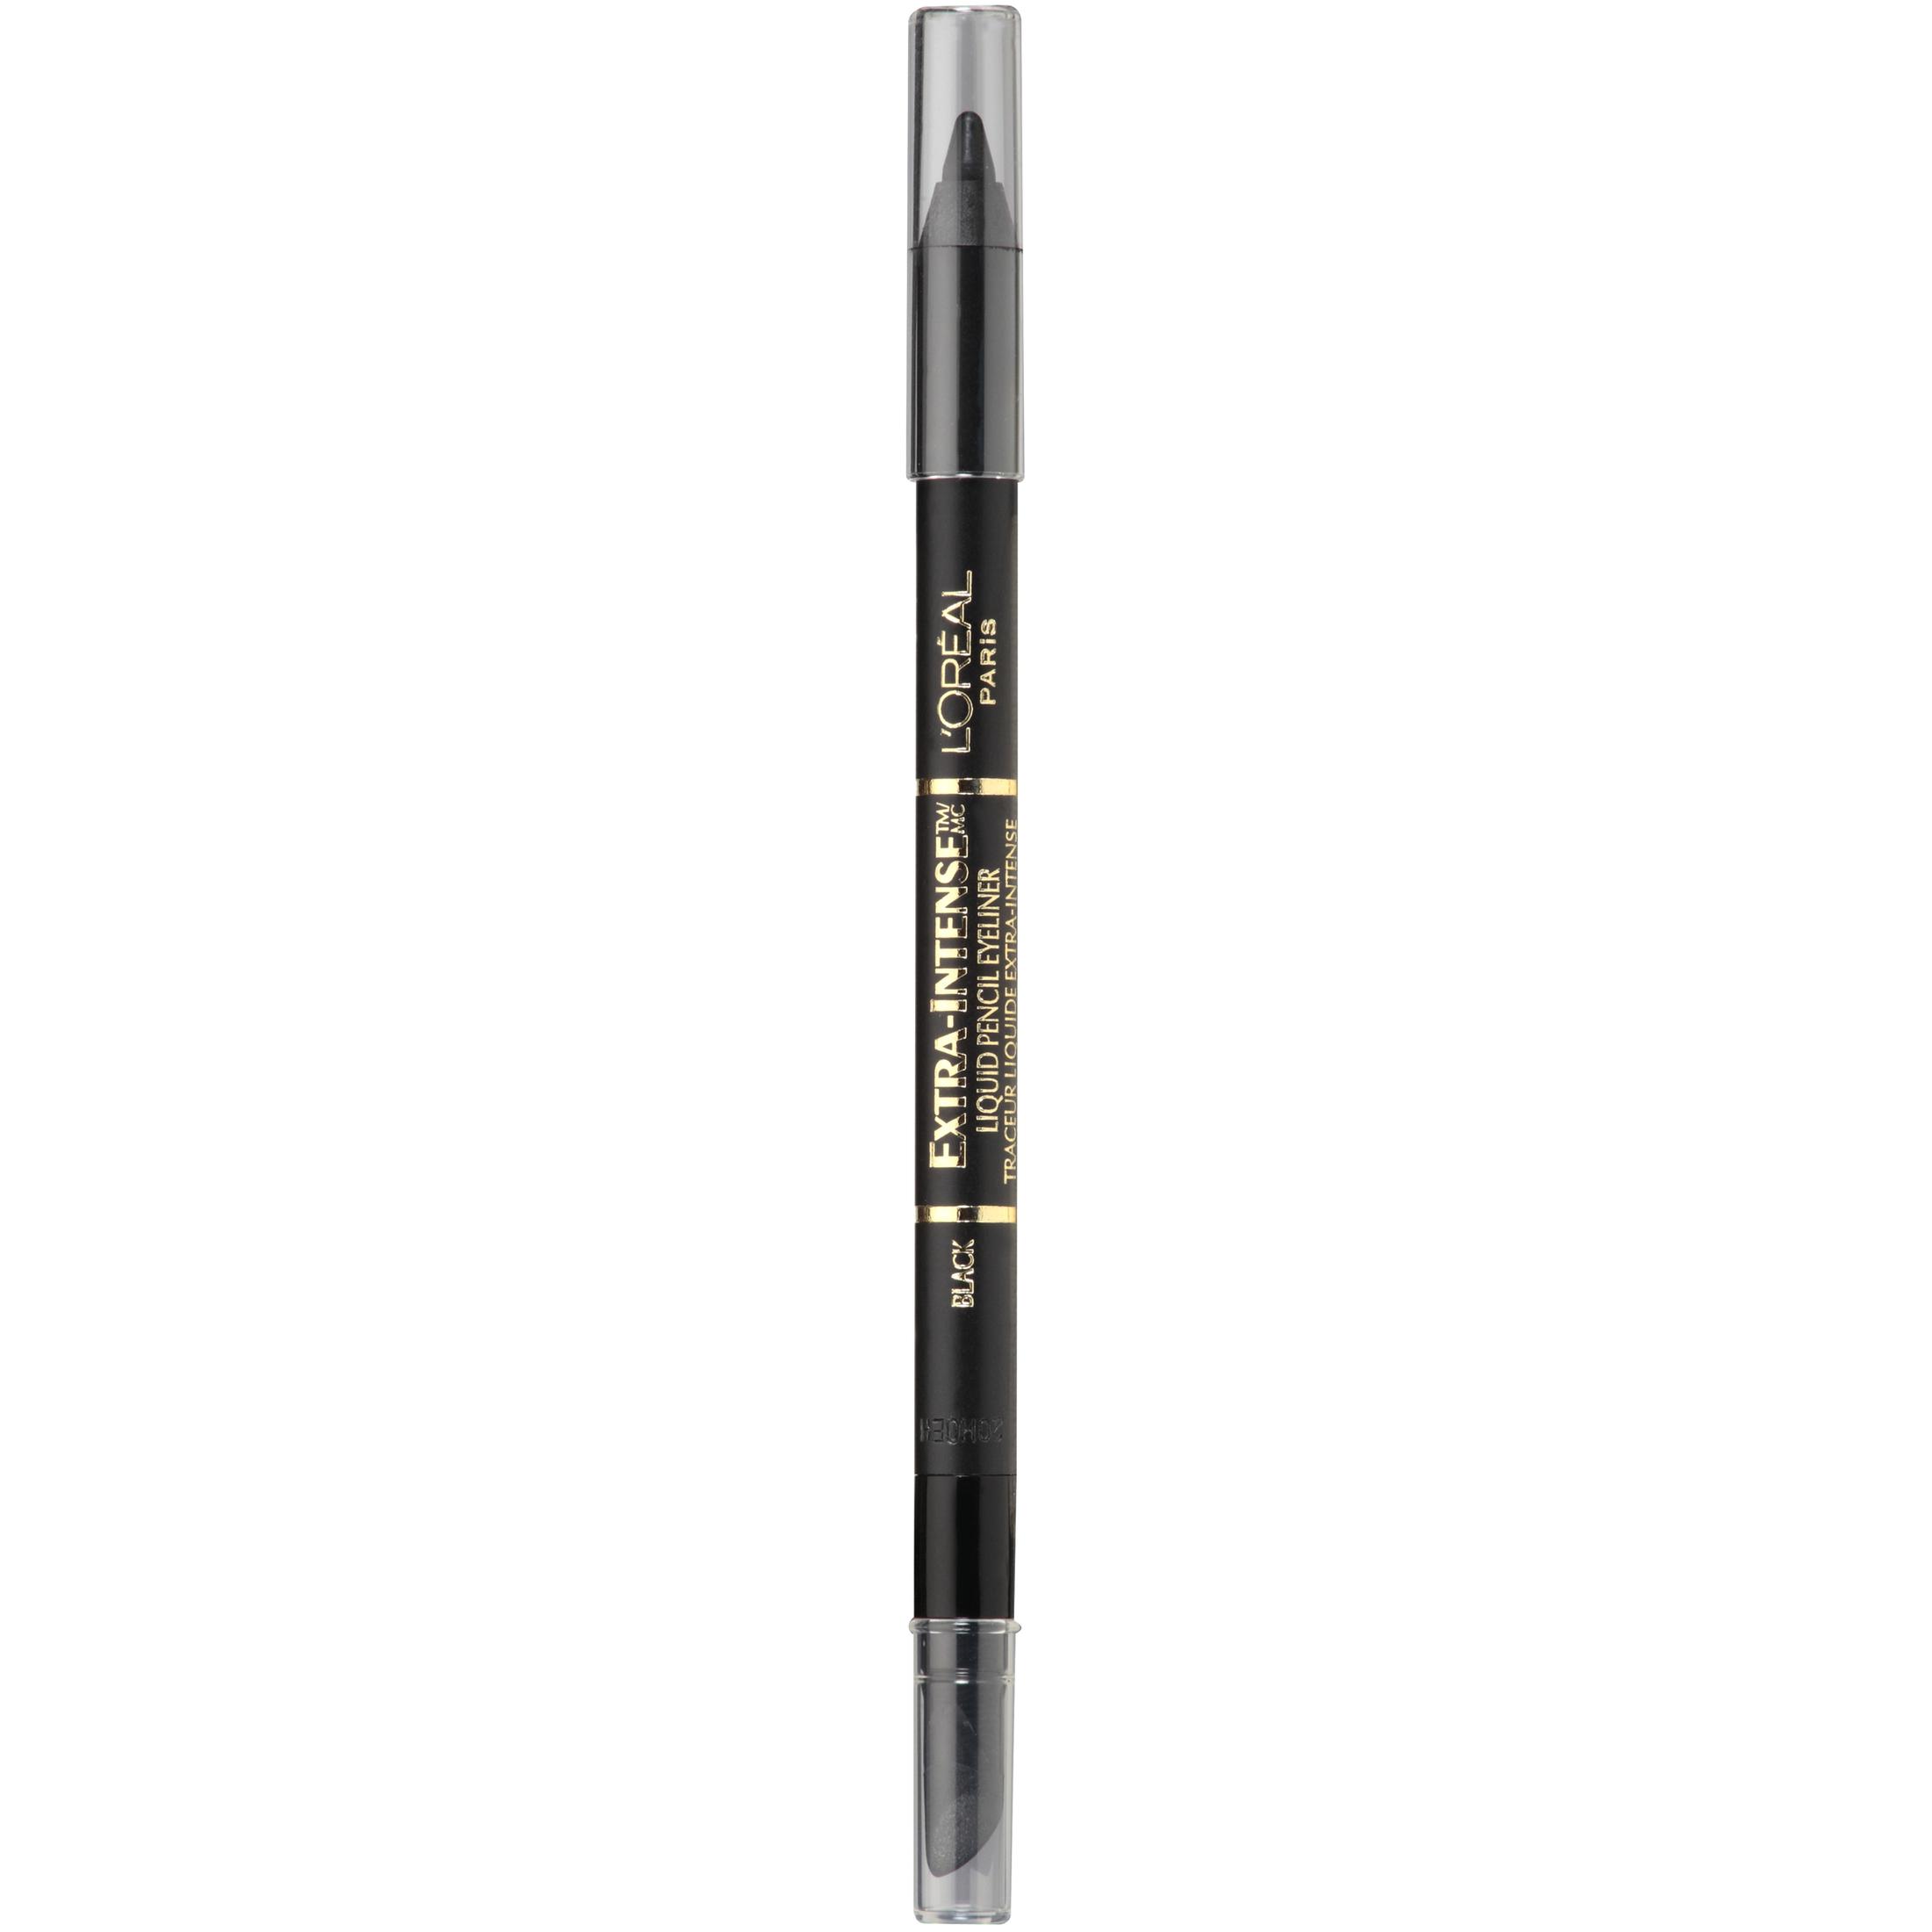 L'Oreal Paris Extra Intense Pencil Eyeliner, 798 Black - image 1 of 8